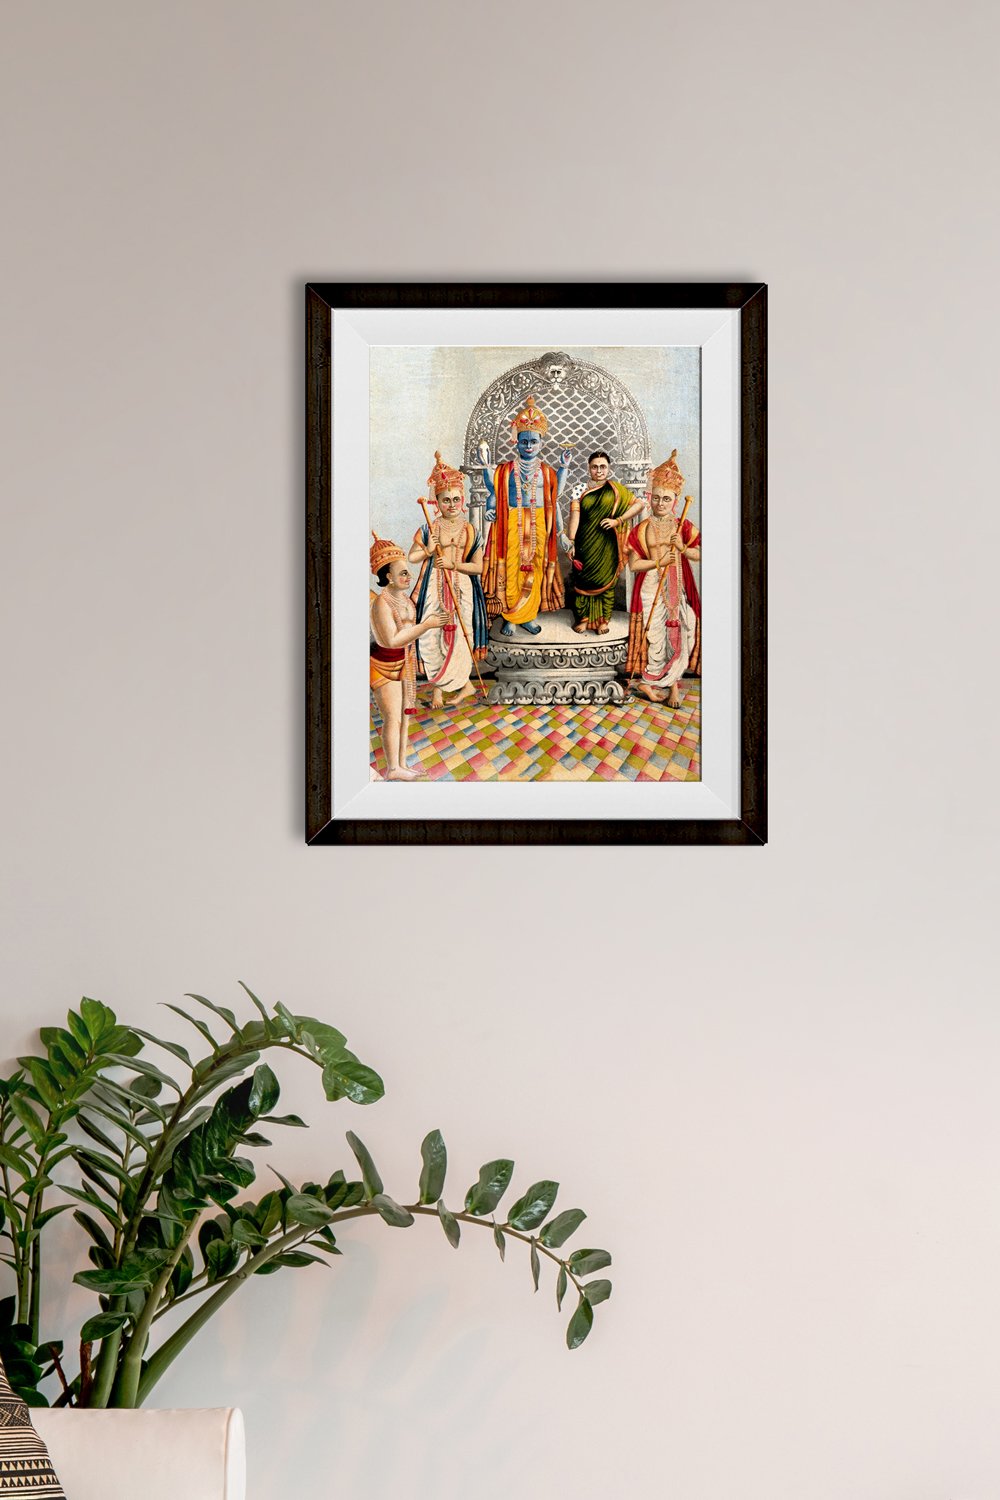 Vishnu-and-Lakshmi-attended-by-Garuda-and-two-attendants Painting - Meri Deewar - MeriDeewar